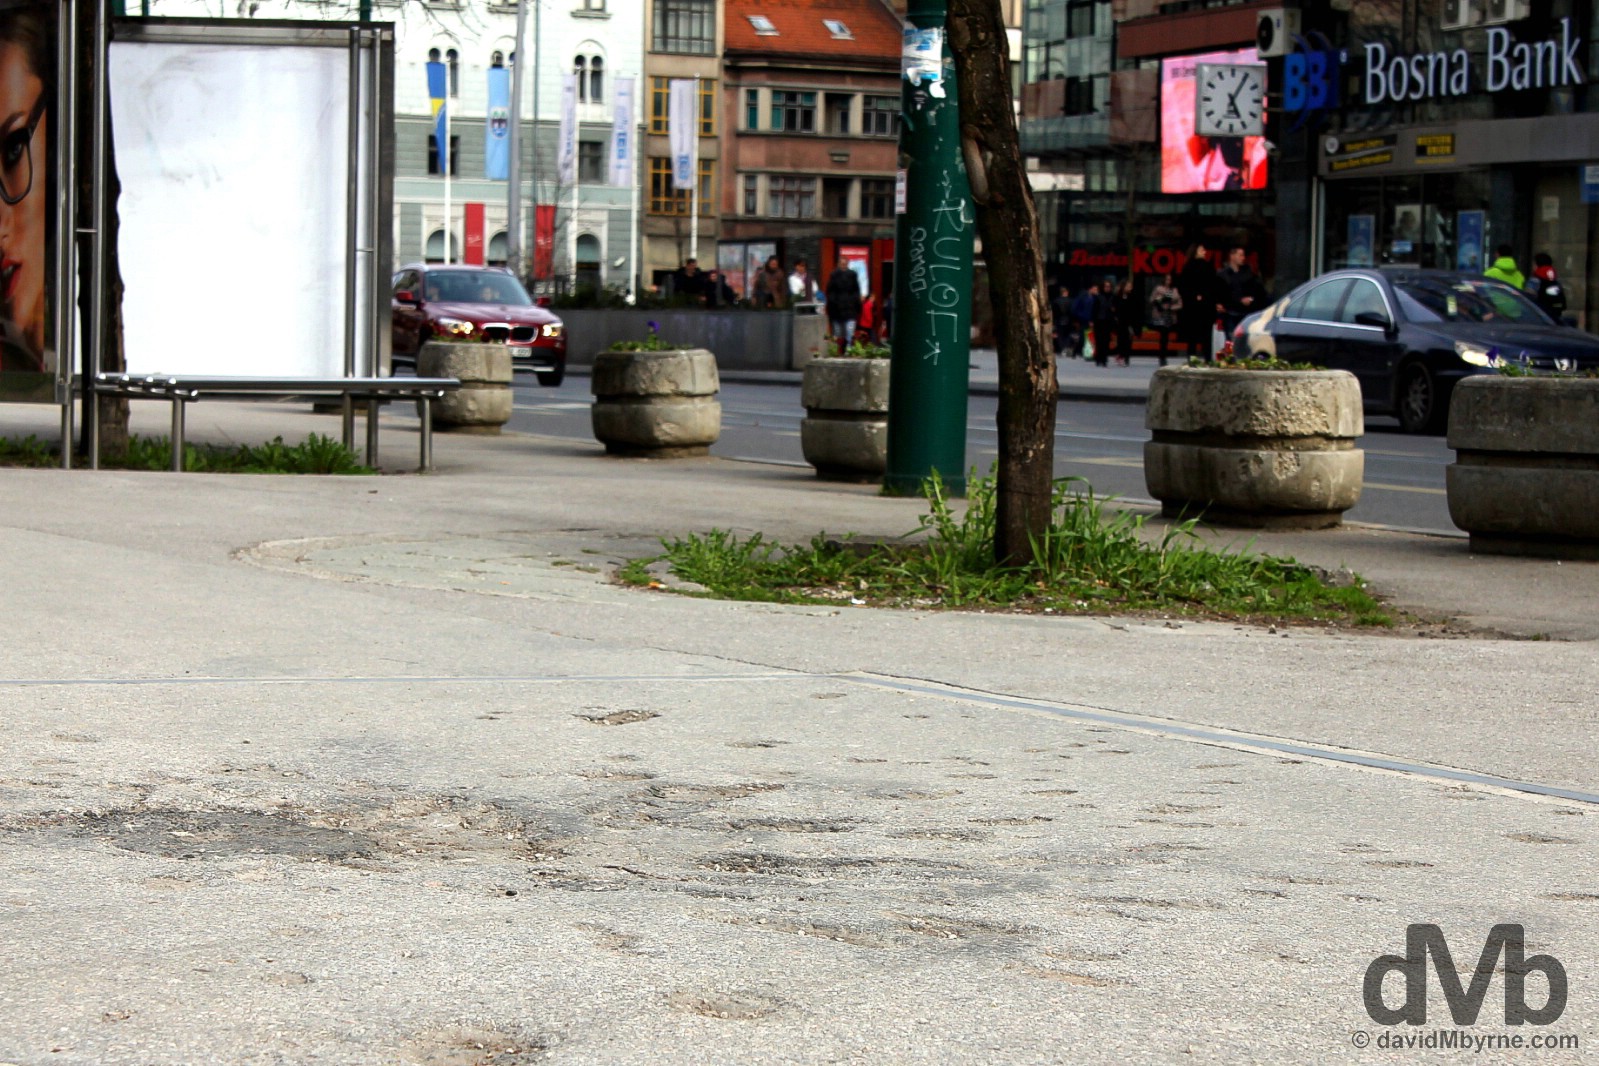 Bosnian War scars on the streets of Sarajevo, Bosnia and Herzegovina. April 4, 2015.